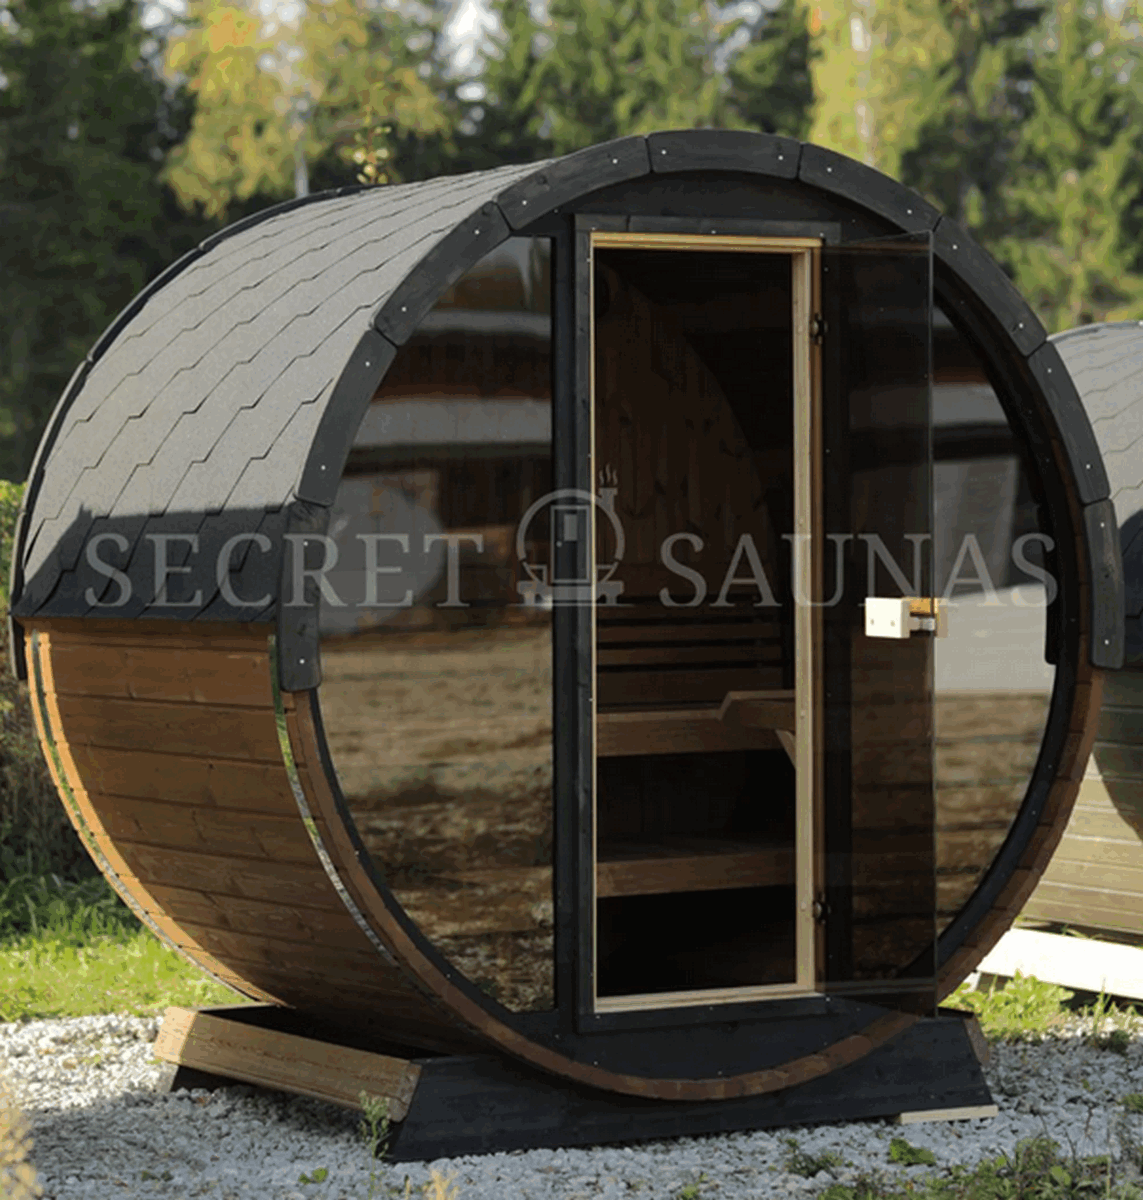 Barrel Saunas in Contemporary Garden Architecture